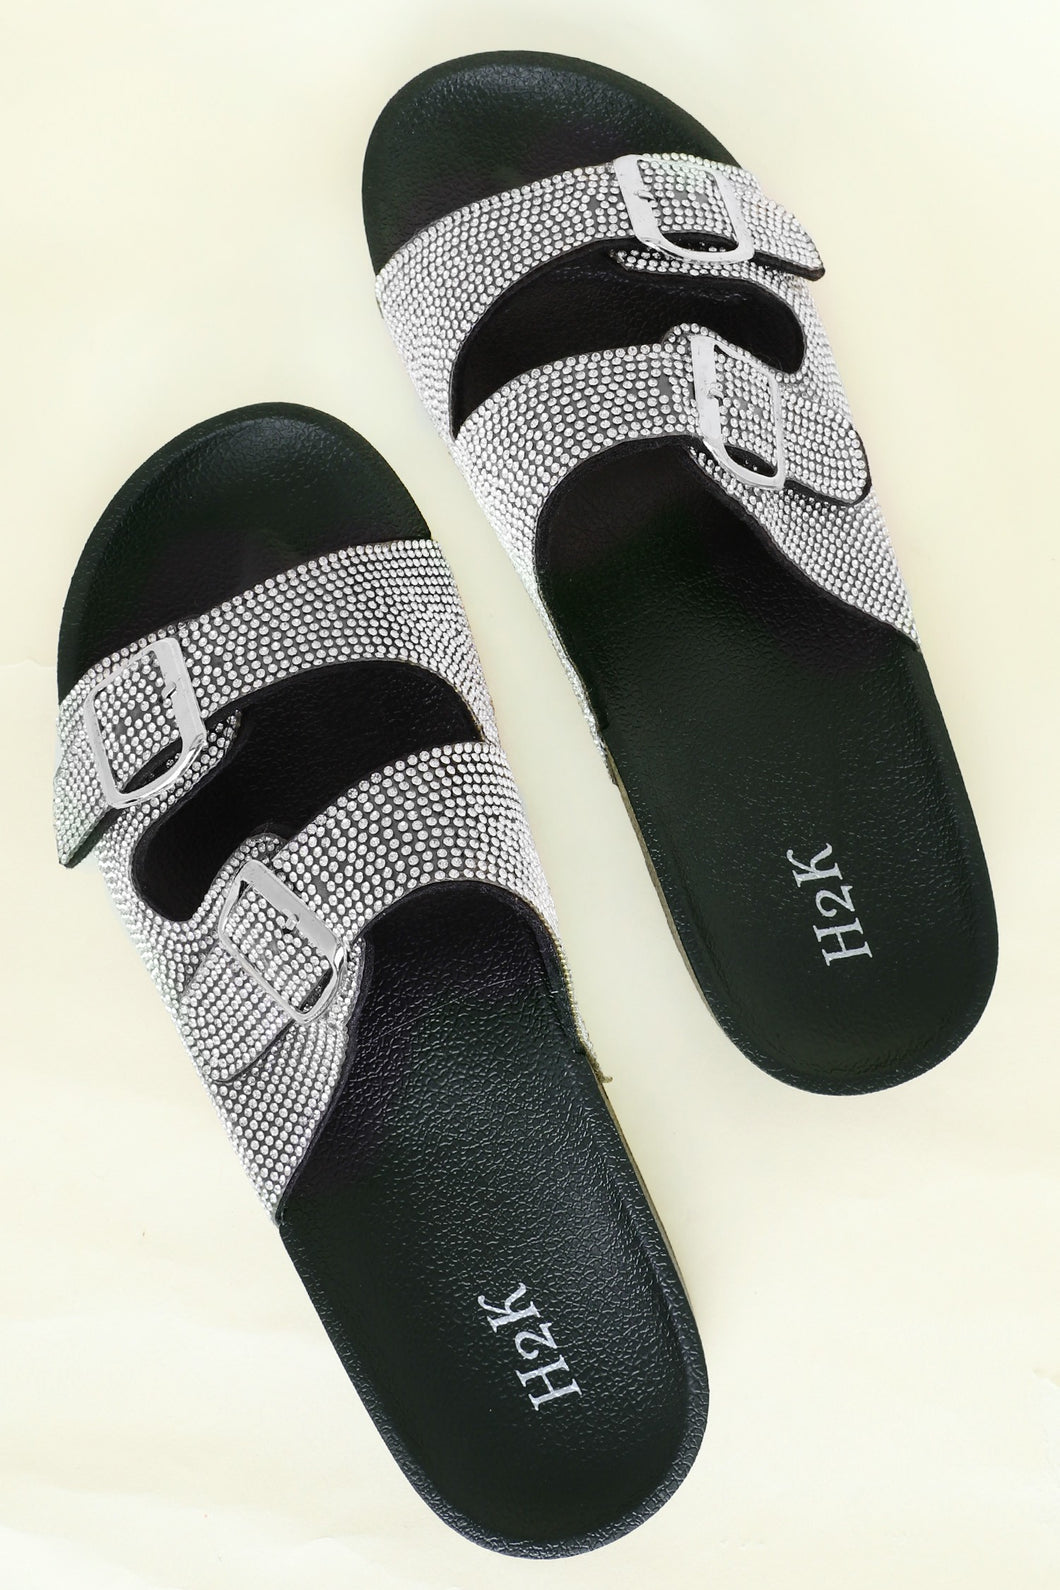 Black and Rhinestone Slip on Sandals